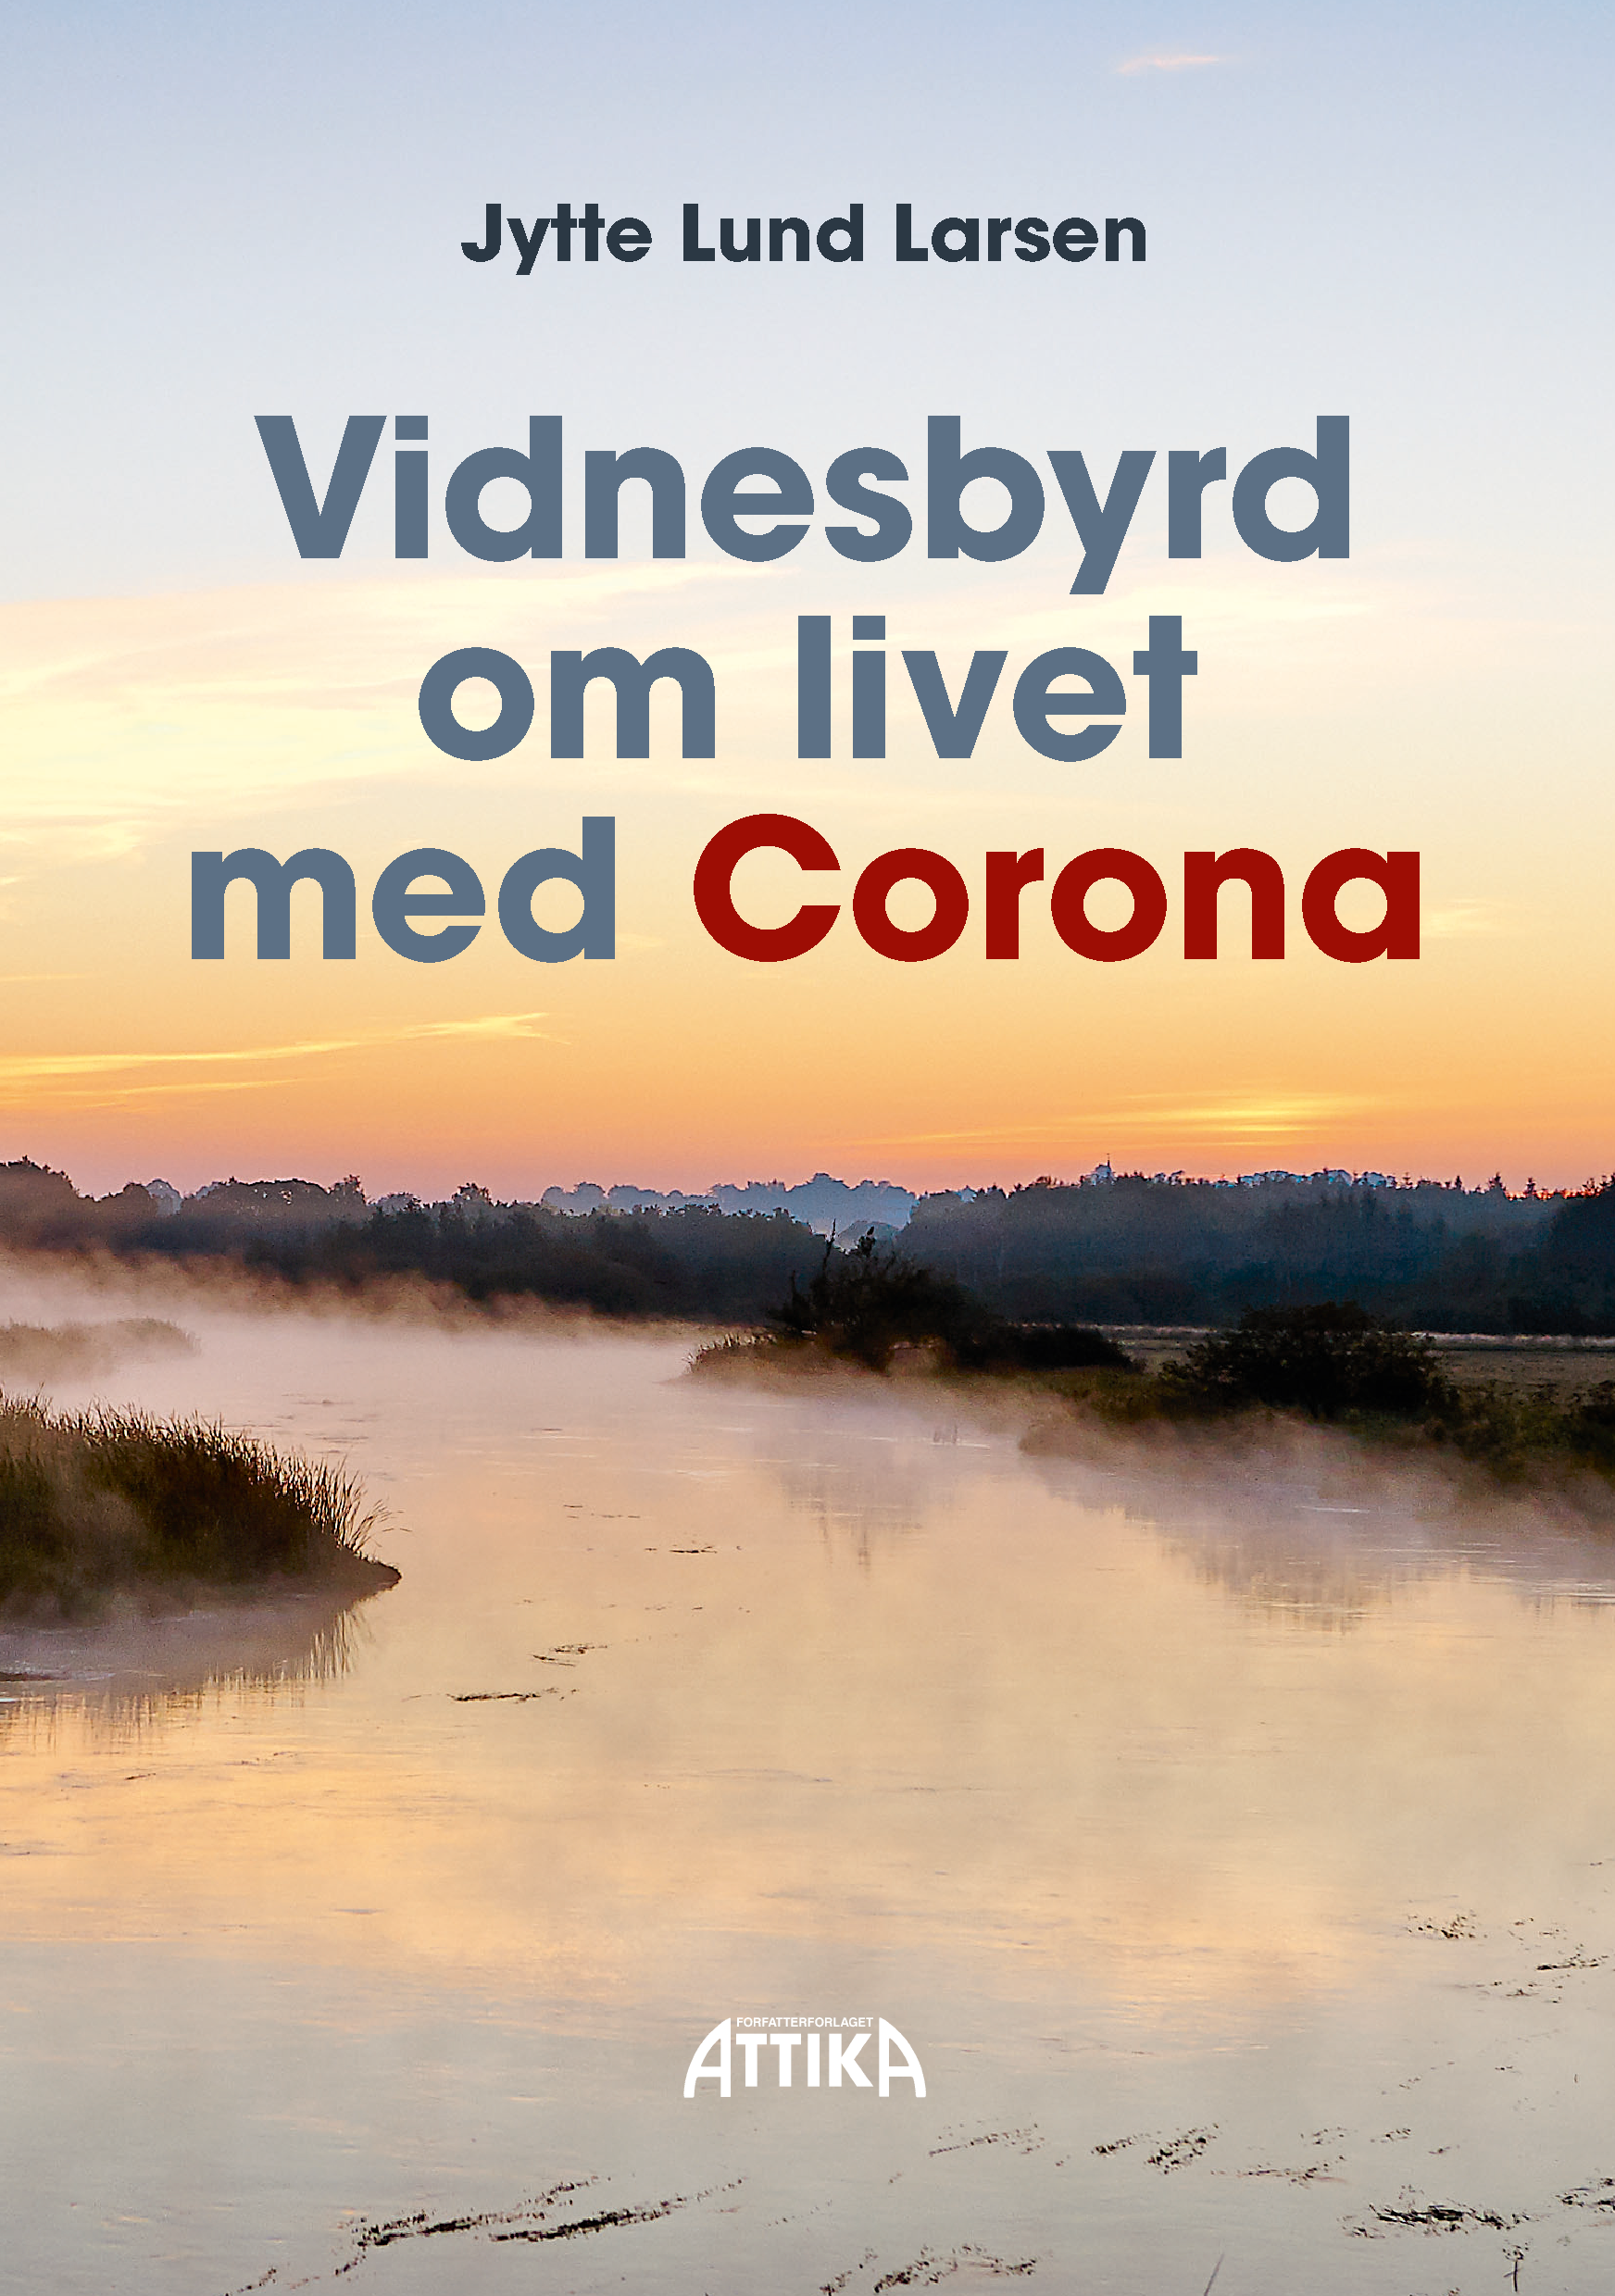 Jytte Lund Larsen: Vidnesbyrd om livet med Corona